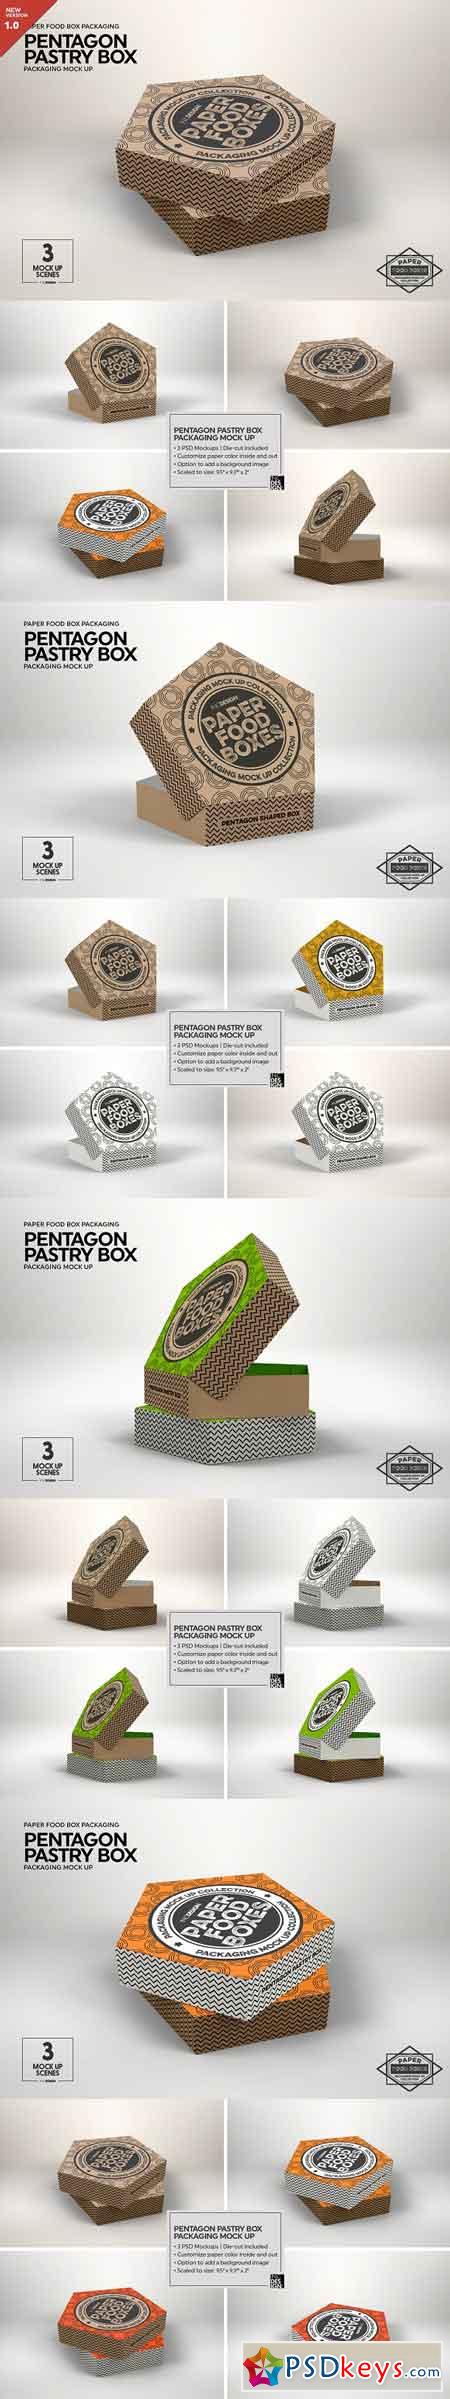 Pentagon Pastry Box Mockup 2903007